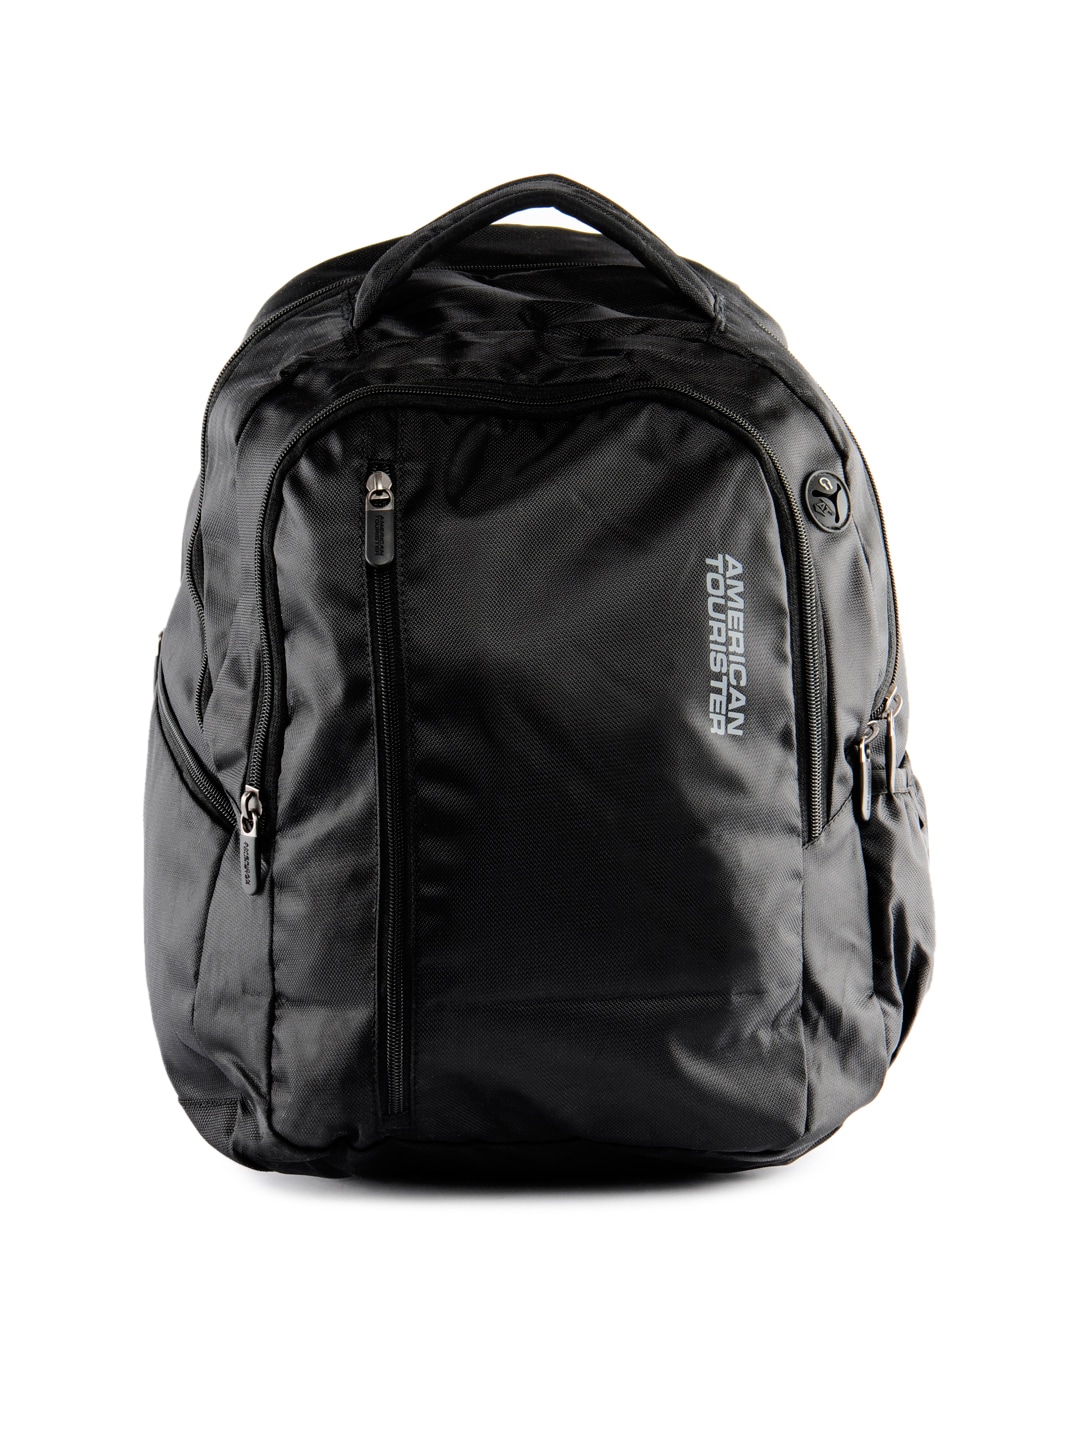 American Tourister Unisex Citi Pro Black Backpack